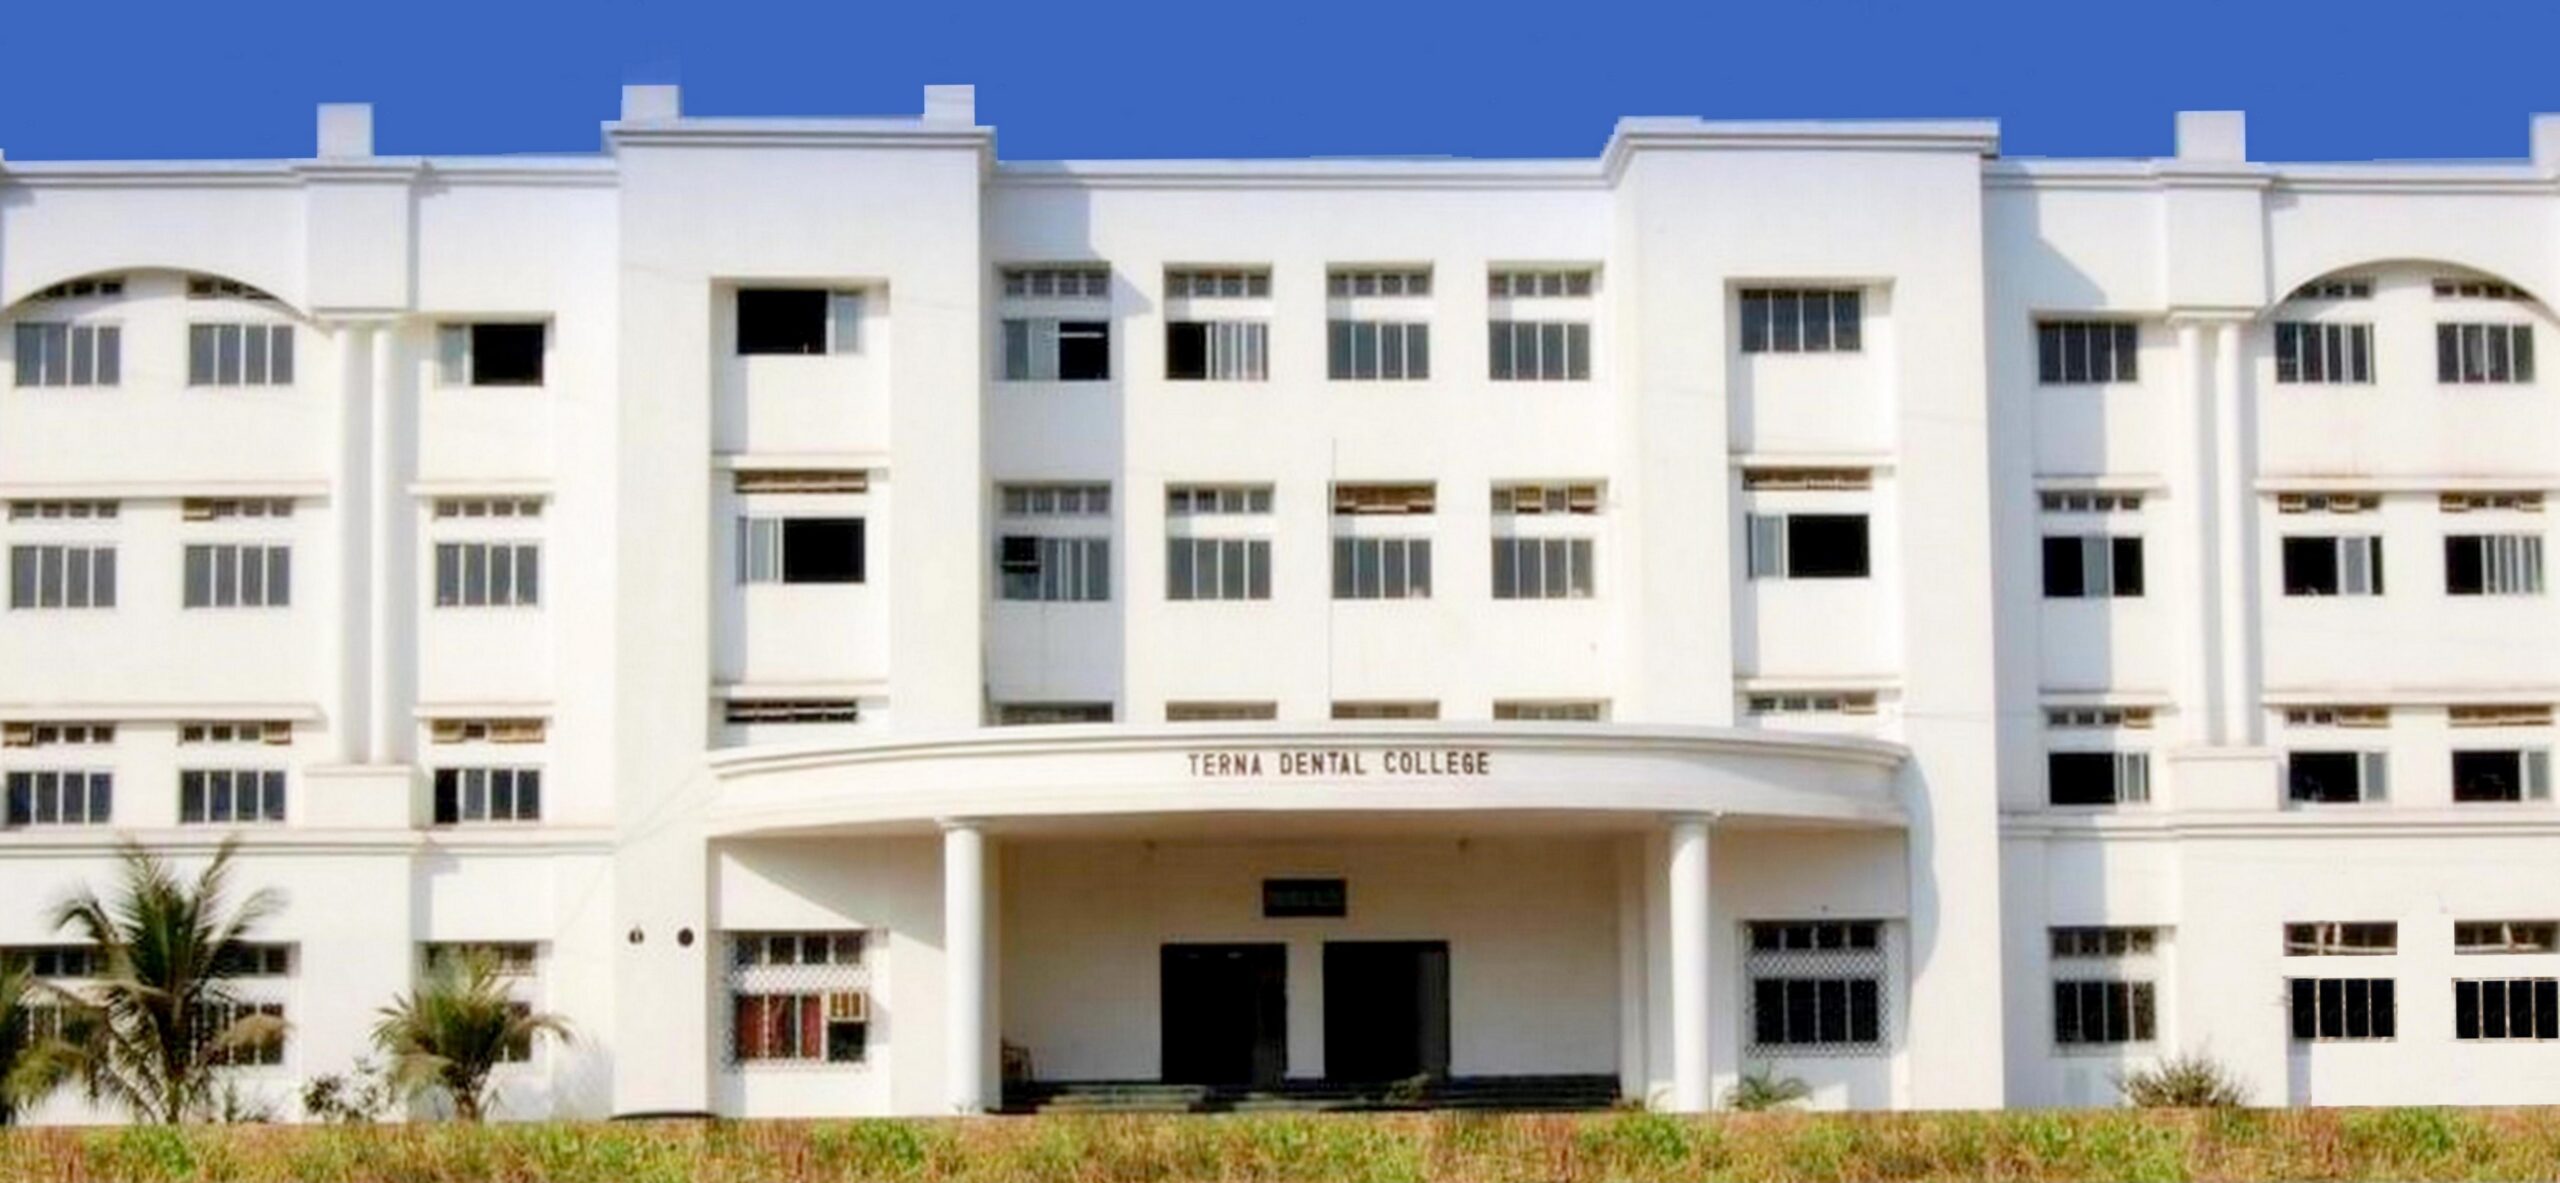 Terna Dental College Navi Mumbai Admission, Courses, Eligibility, Fees, Ranking